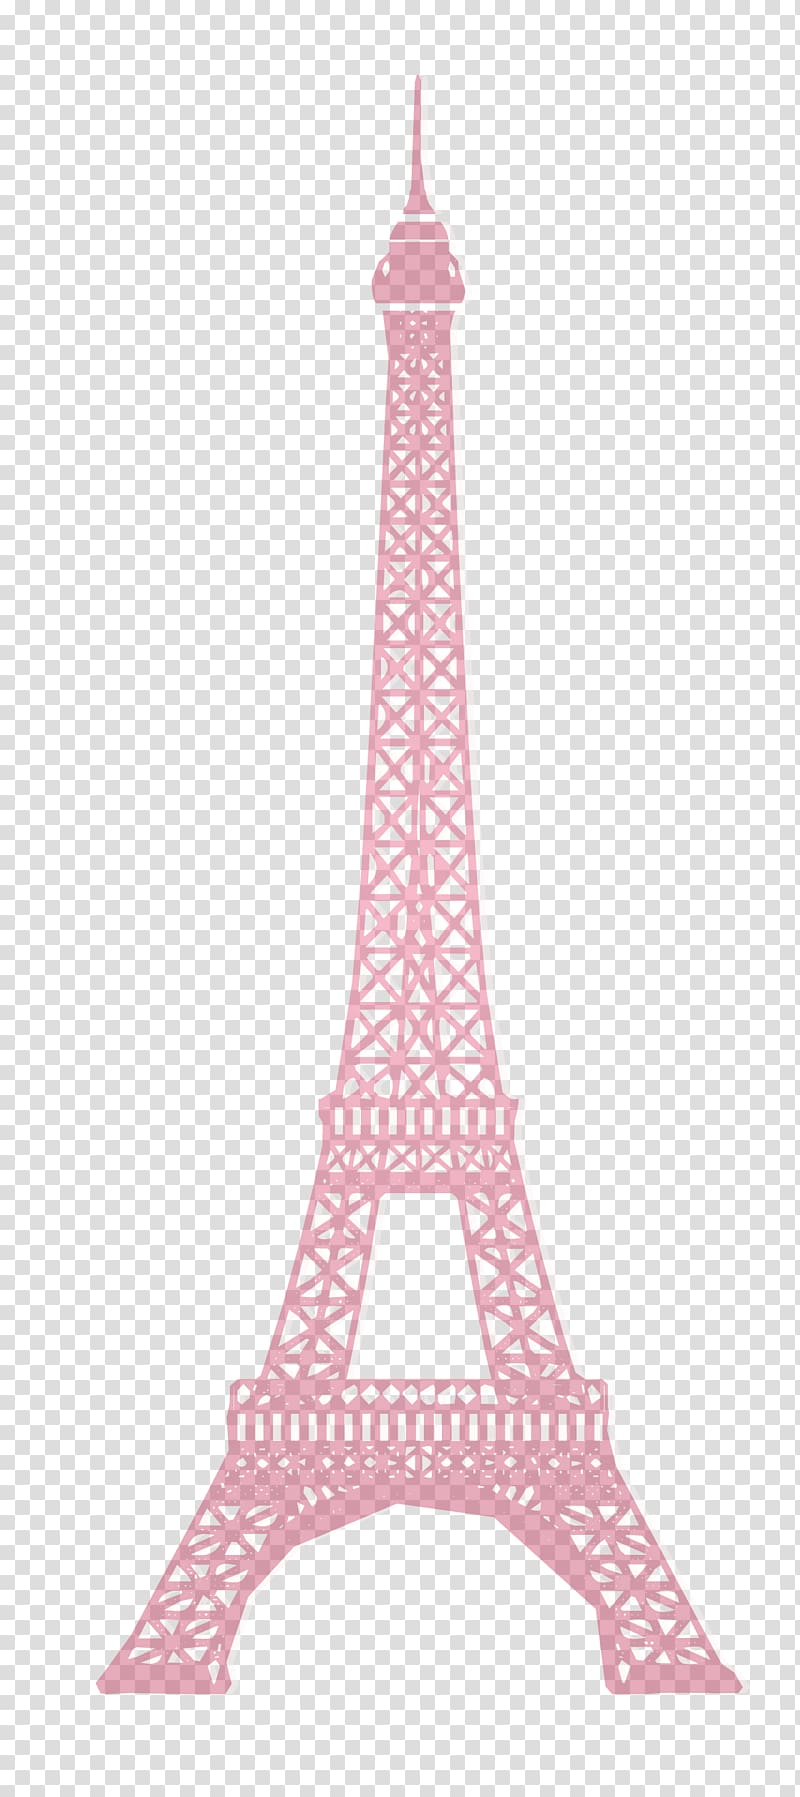 Eiffel Tower, Paris illustration, Eiffel Tower Silhouette, Eiffel Tower transparent background PNG clipart